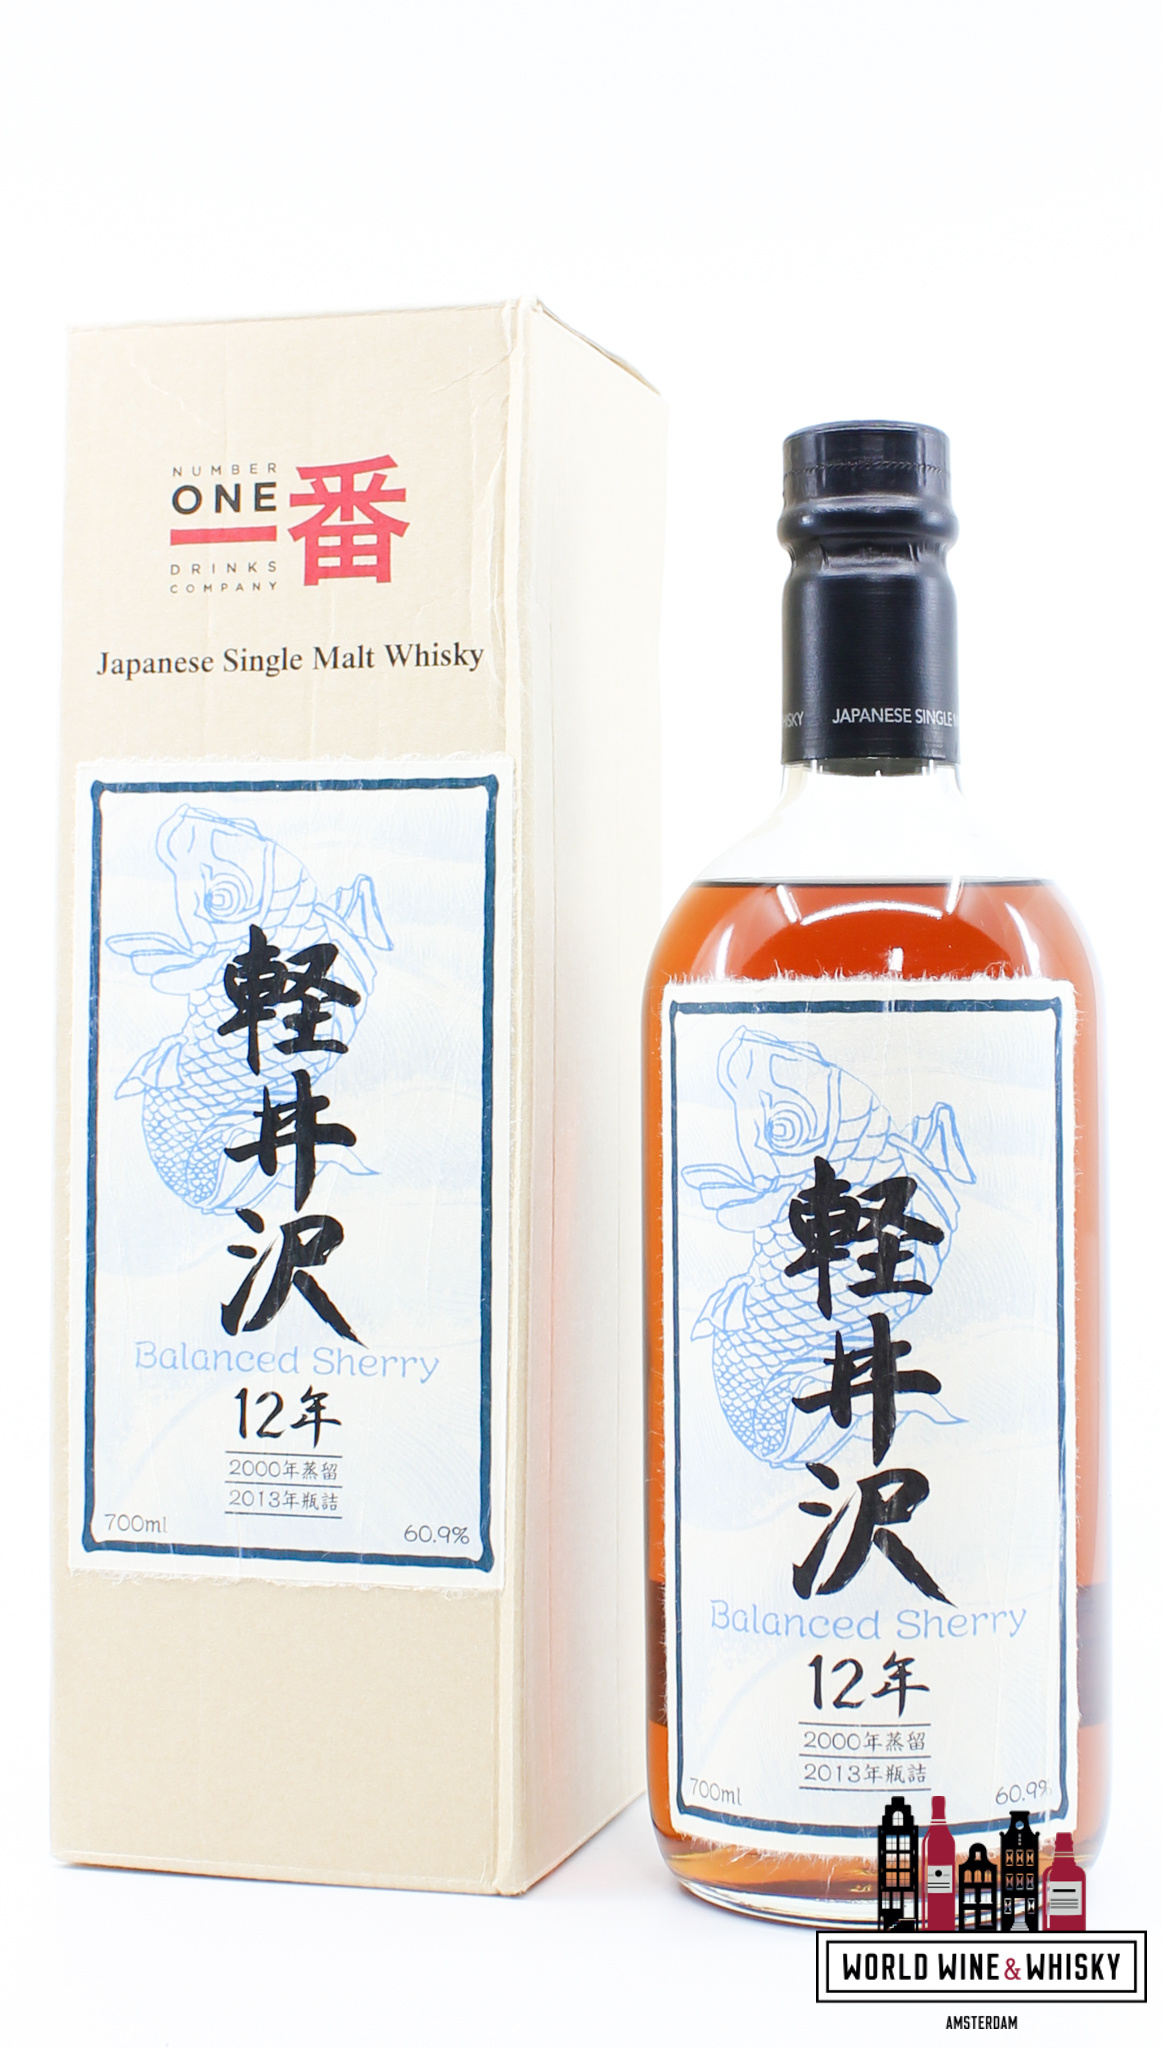 Karuizawa Karuizawa 12 Years Old 2000 2013 - Cask 7590 - Balanced Sherry 60.9% (1 of 470) - Closed Distillery